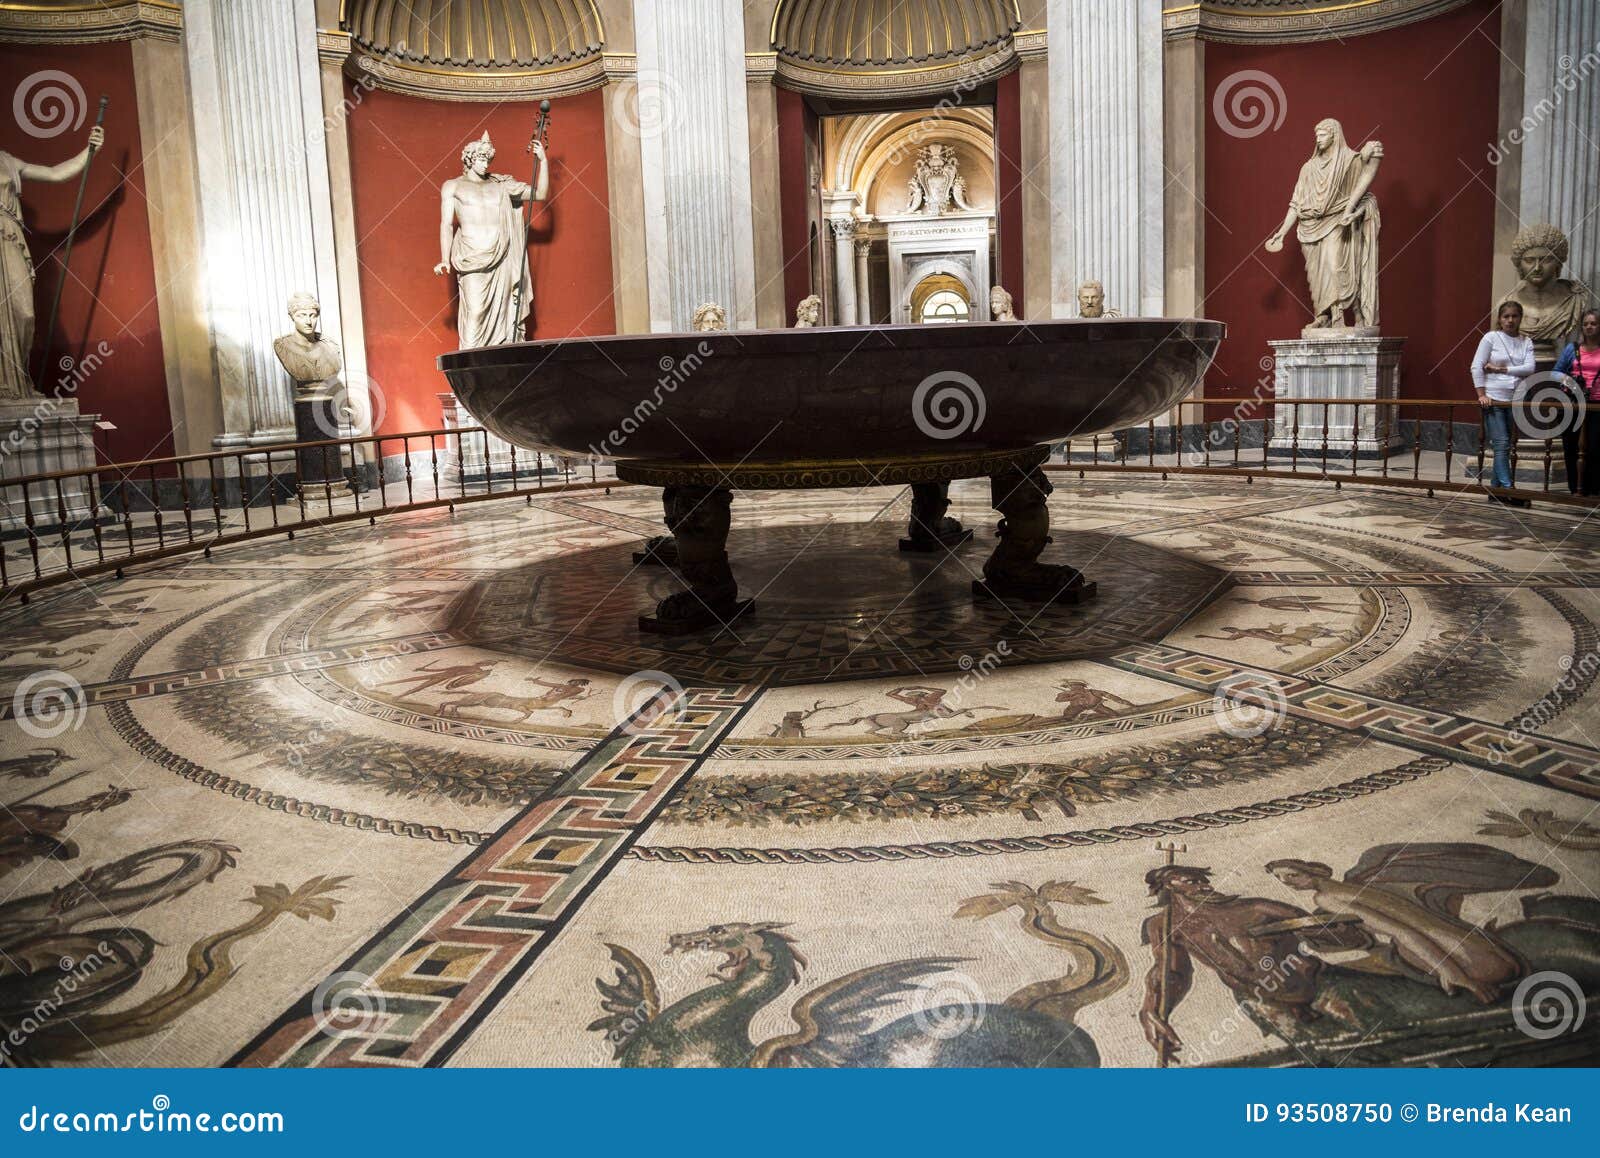 Ancient Roman Mosaic Floor In The Vatican Museums In The Vatican